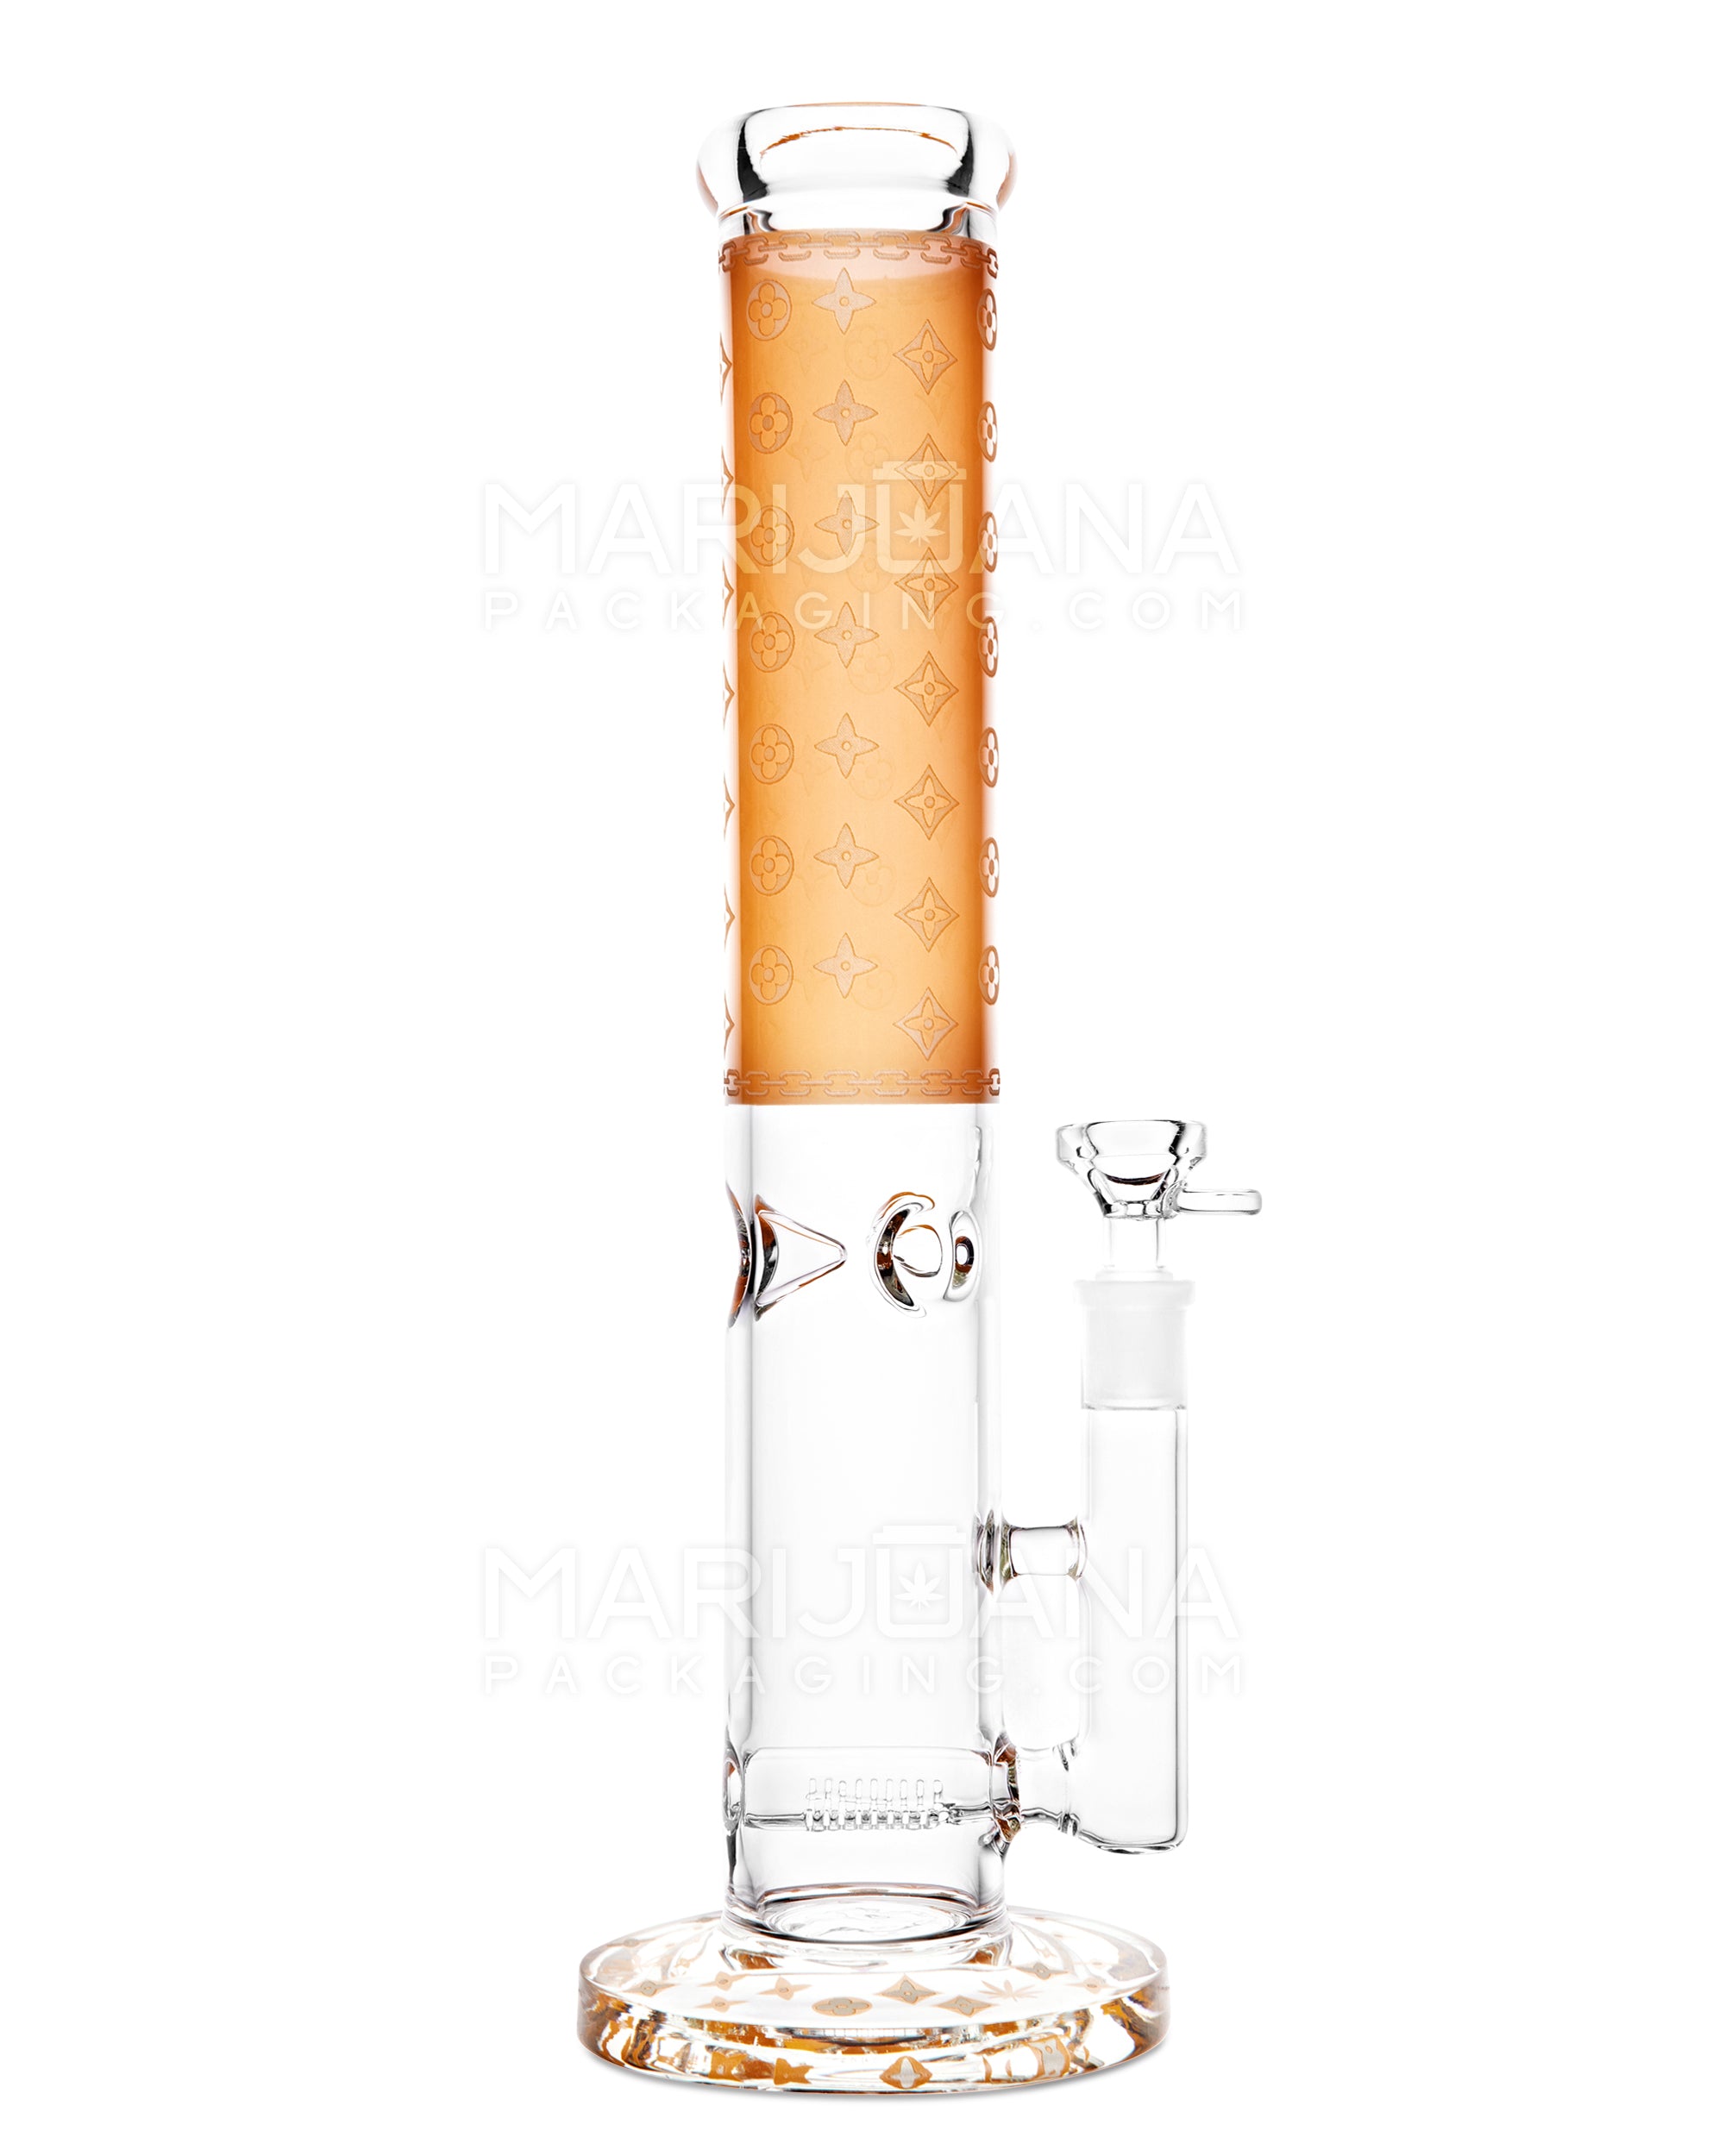 Straight Neck Luxury Design Inline Perc Glass Water Pipe w/ Ice Catcher | 14in Tall - 14mm Bowl - Orange - 1